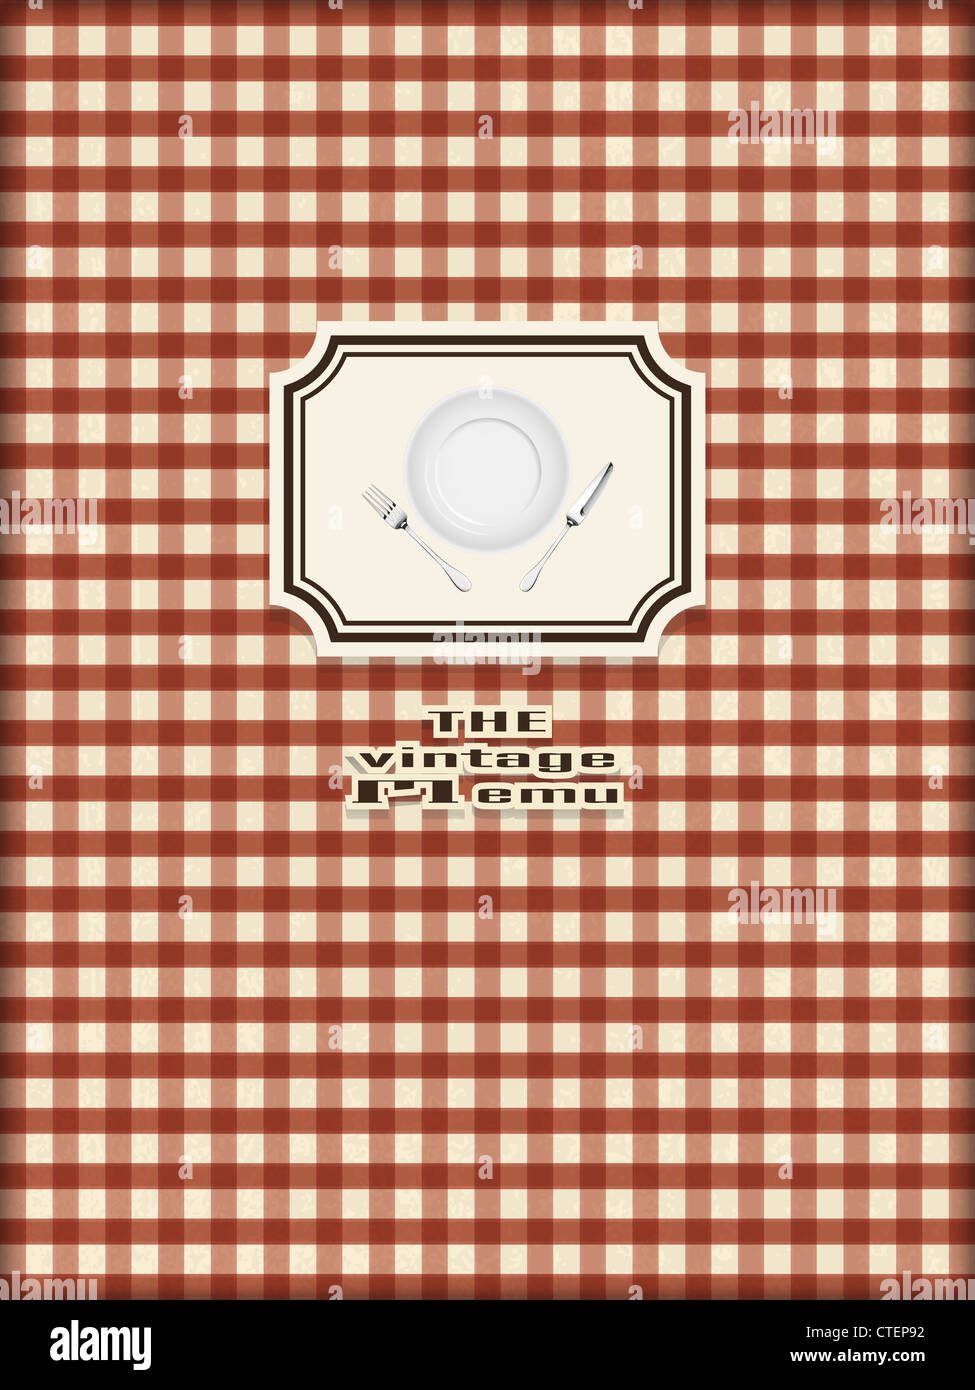 vintage restaurant menu design vintage concept Stock Photo